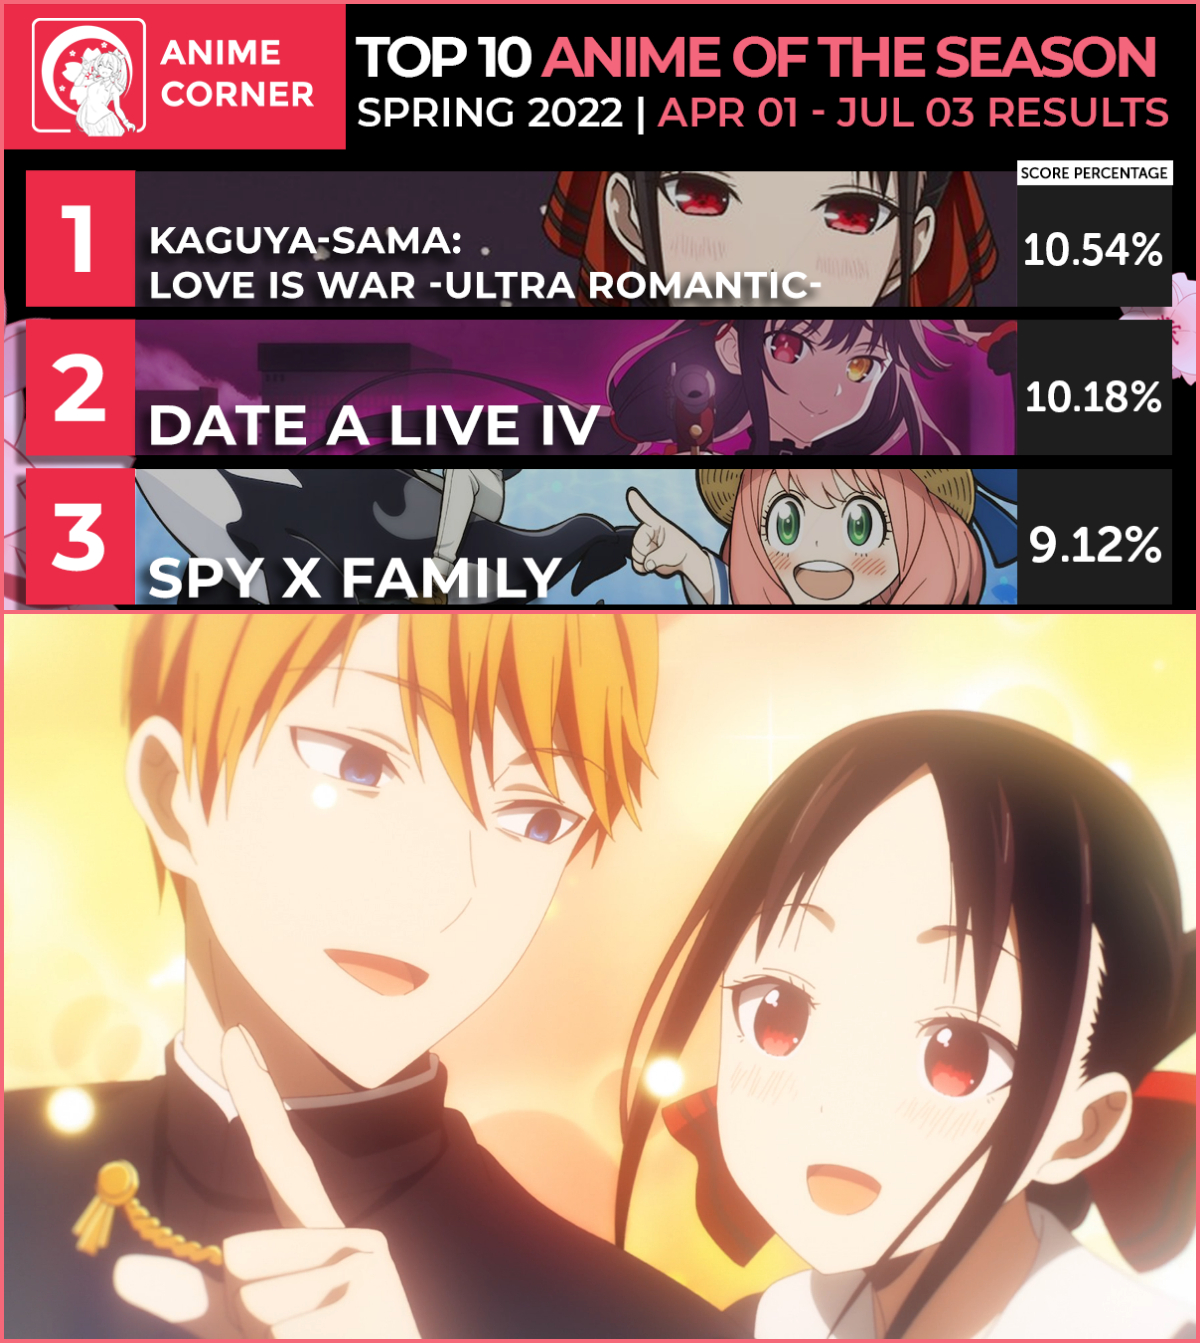 Kaguya-sama: Love is War wins unprecedented 3rd Anime of the